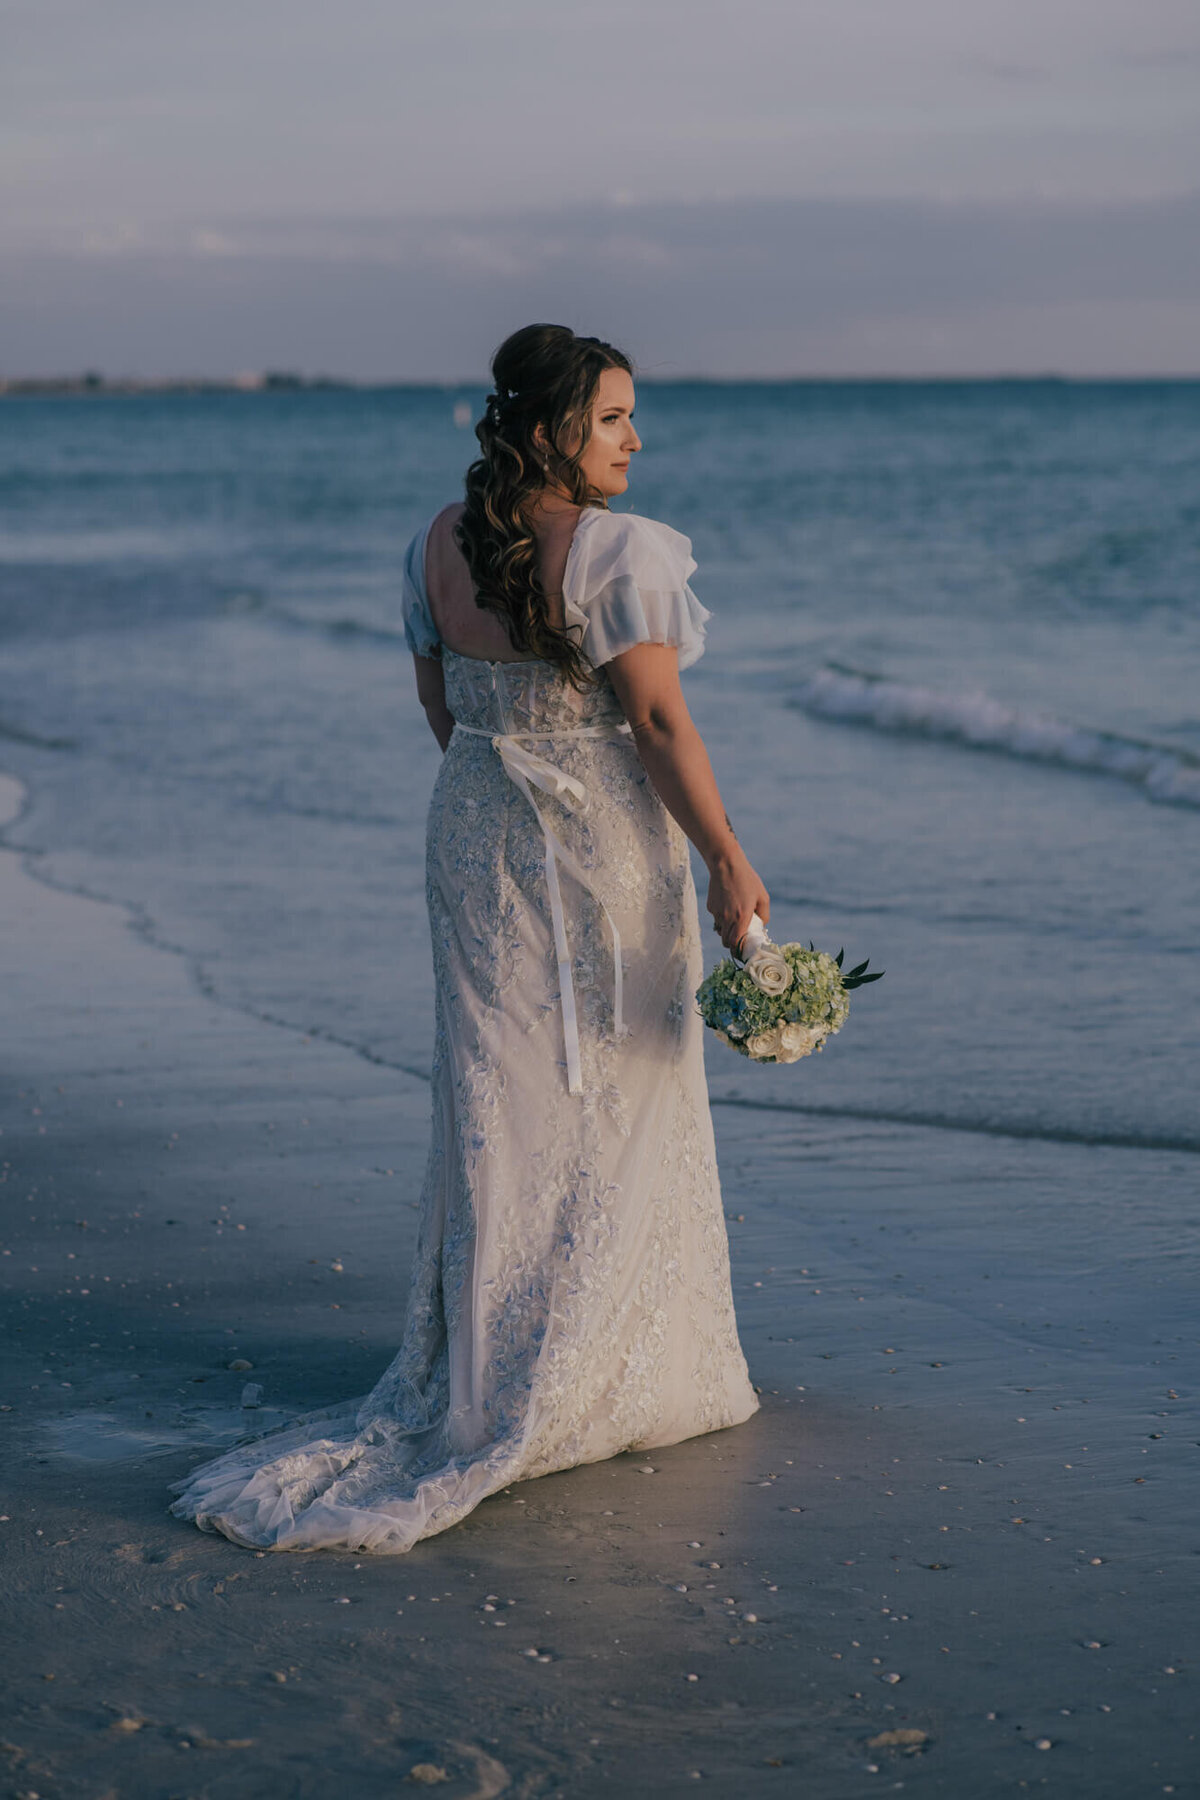 Bride standing on beach